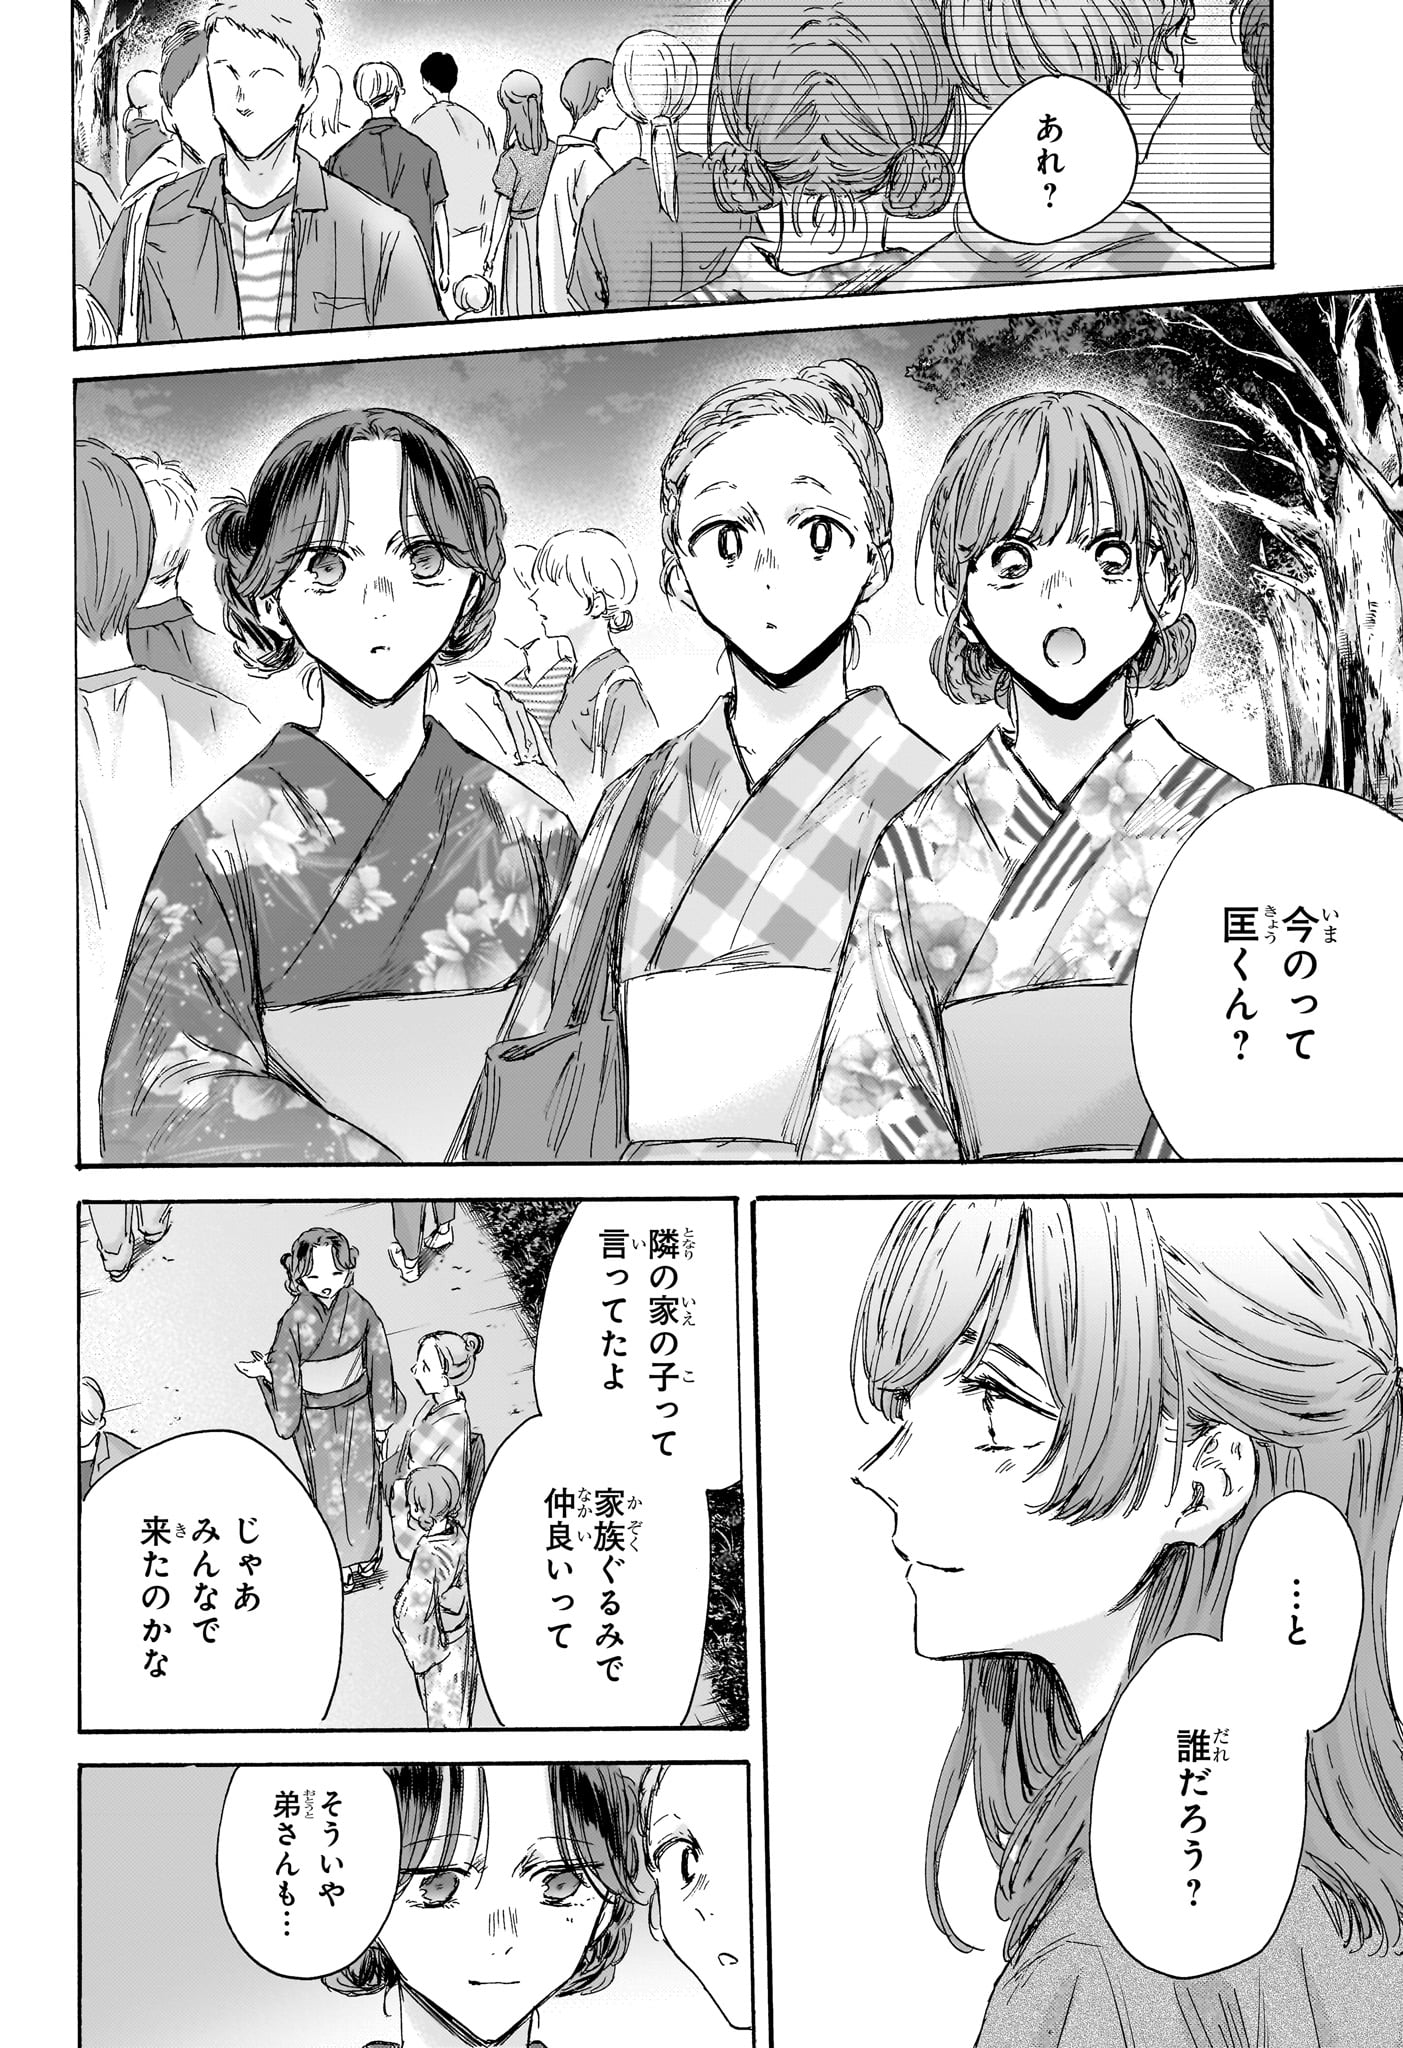 Ao no Hako - Chapter 148 - Page 4